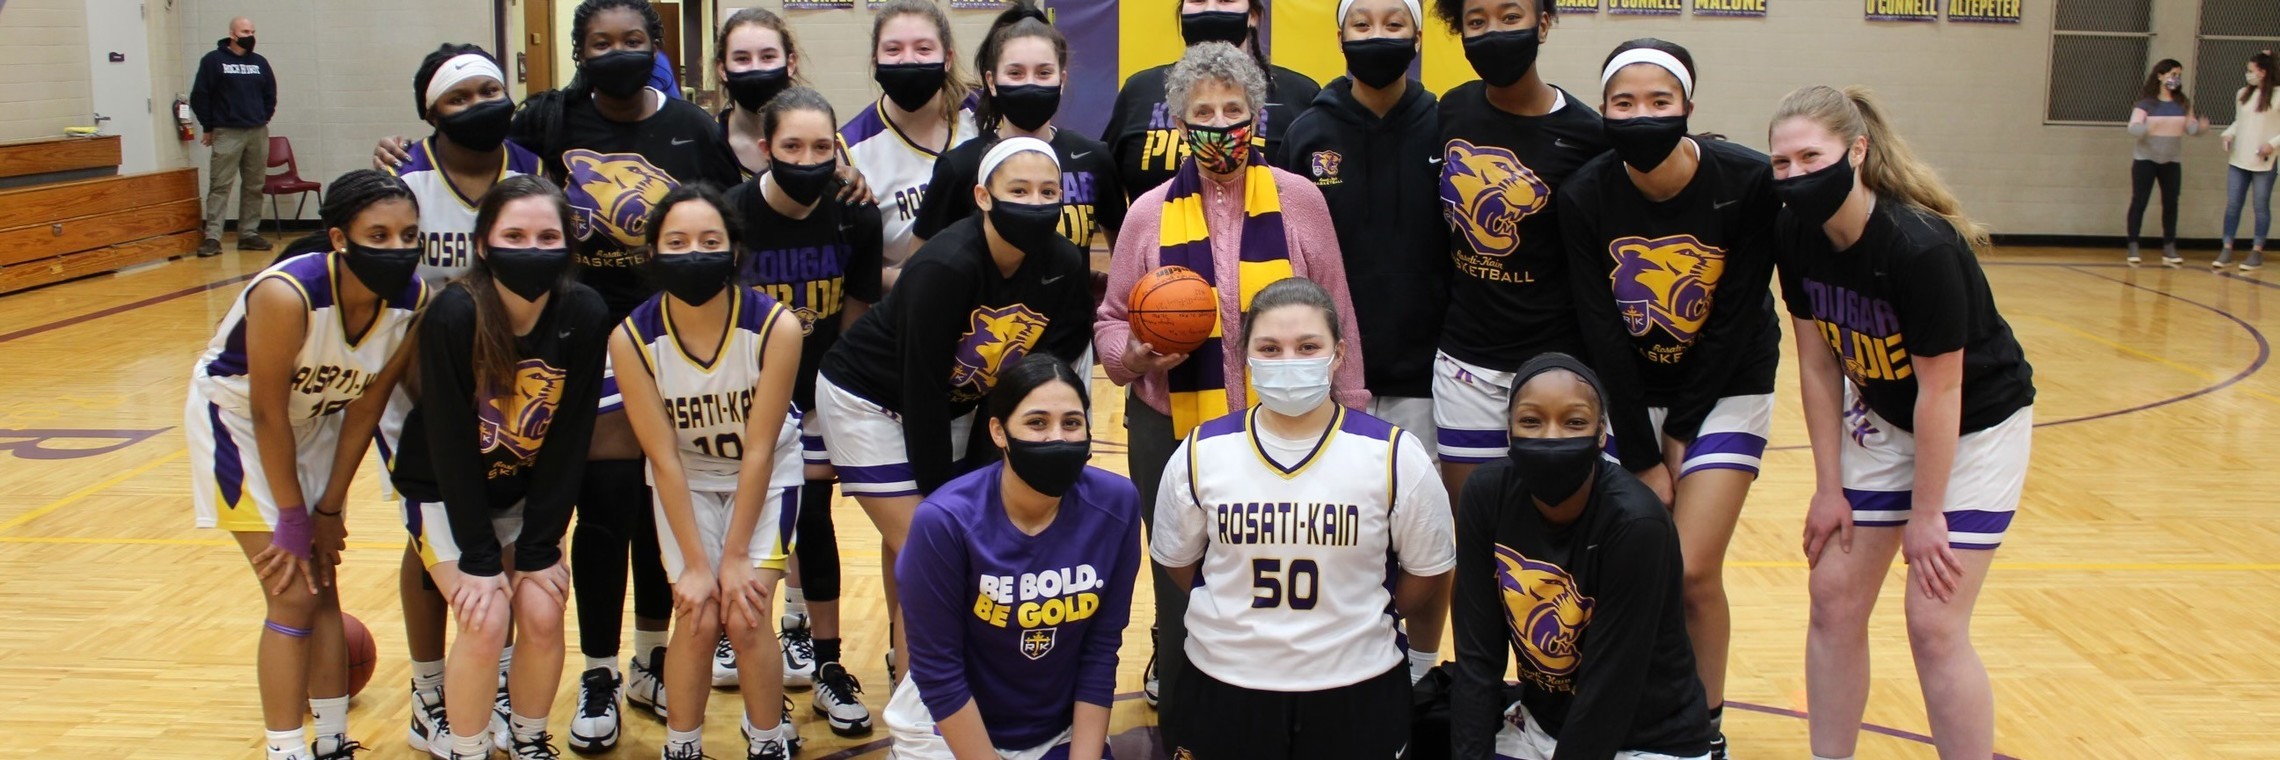 Sister Nancy with the Rosati-Kain Basketball Team